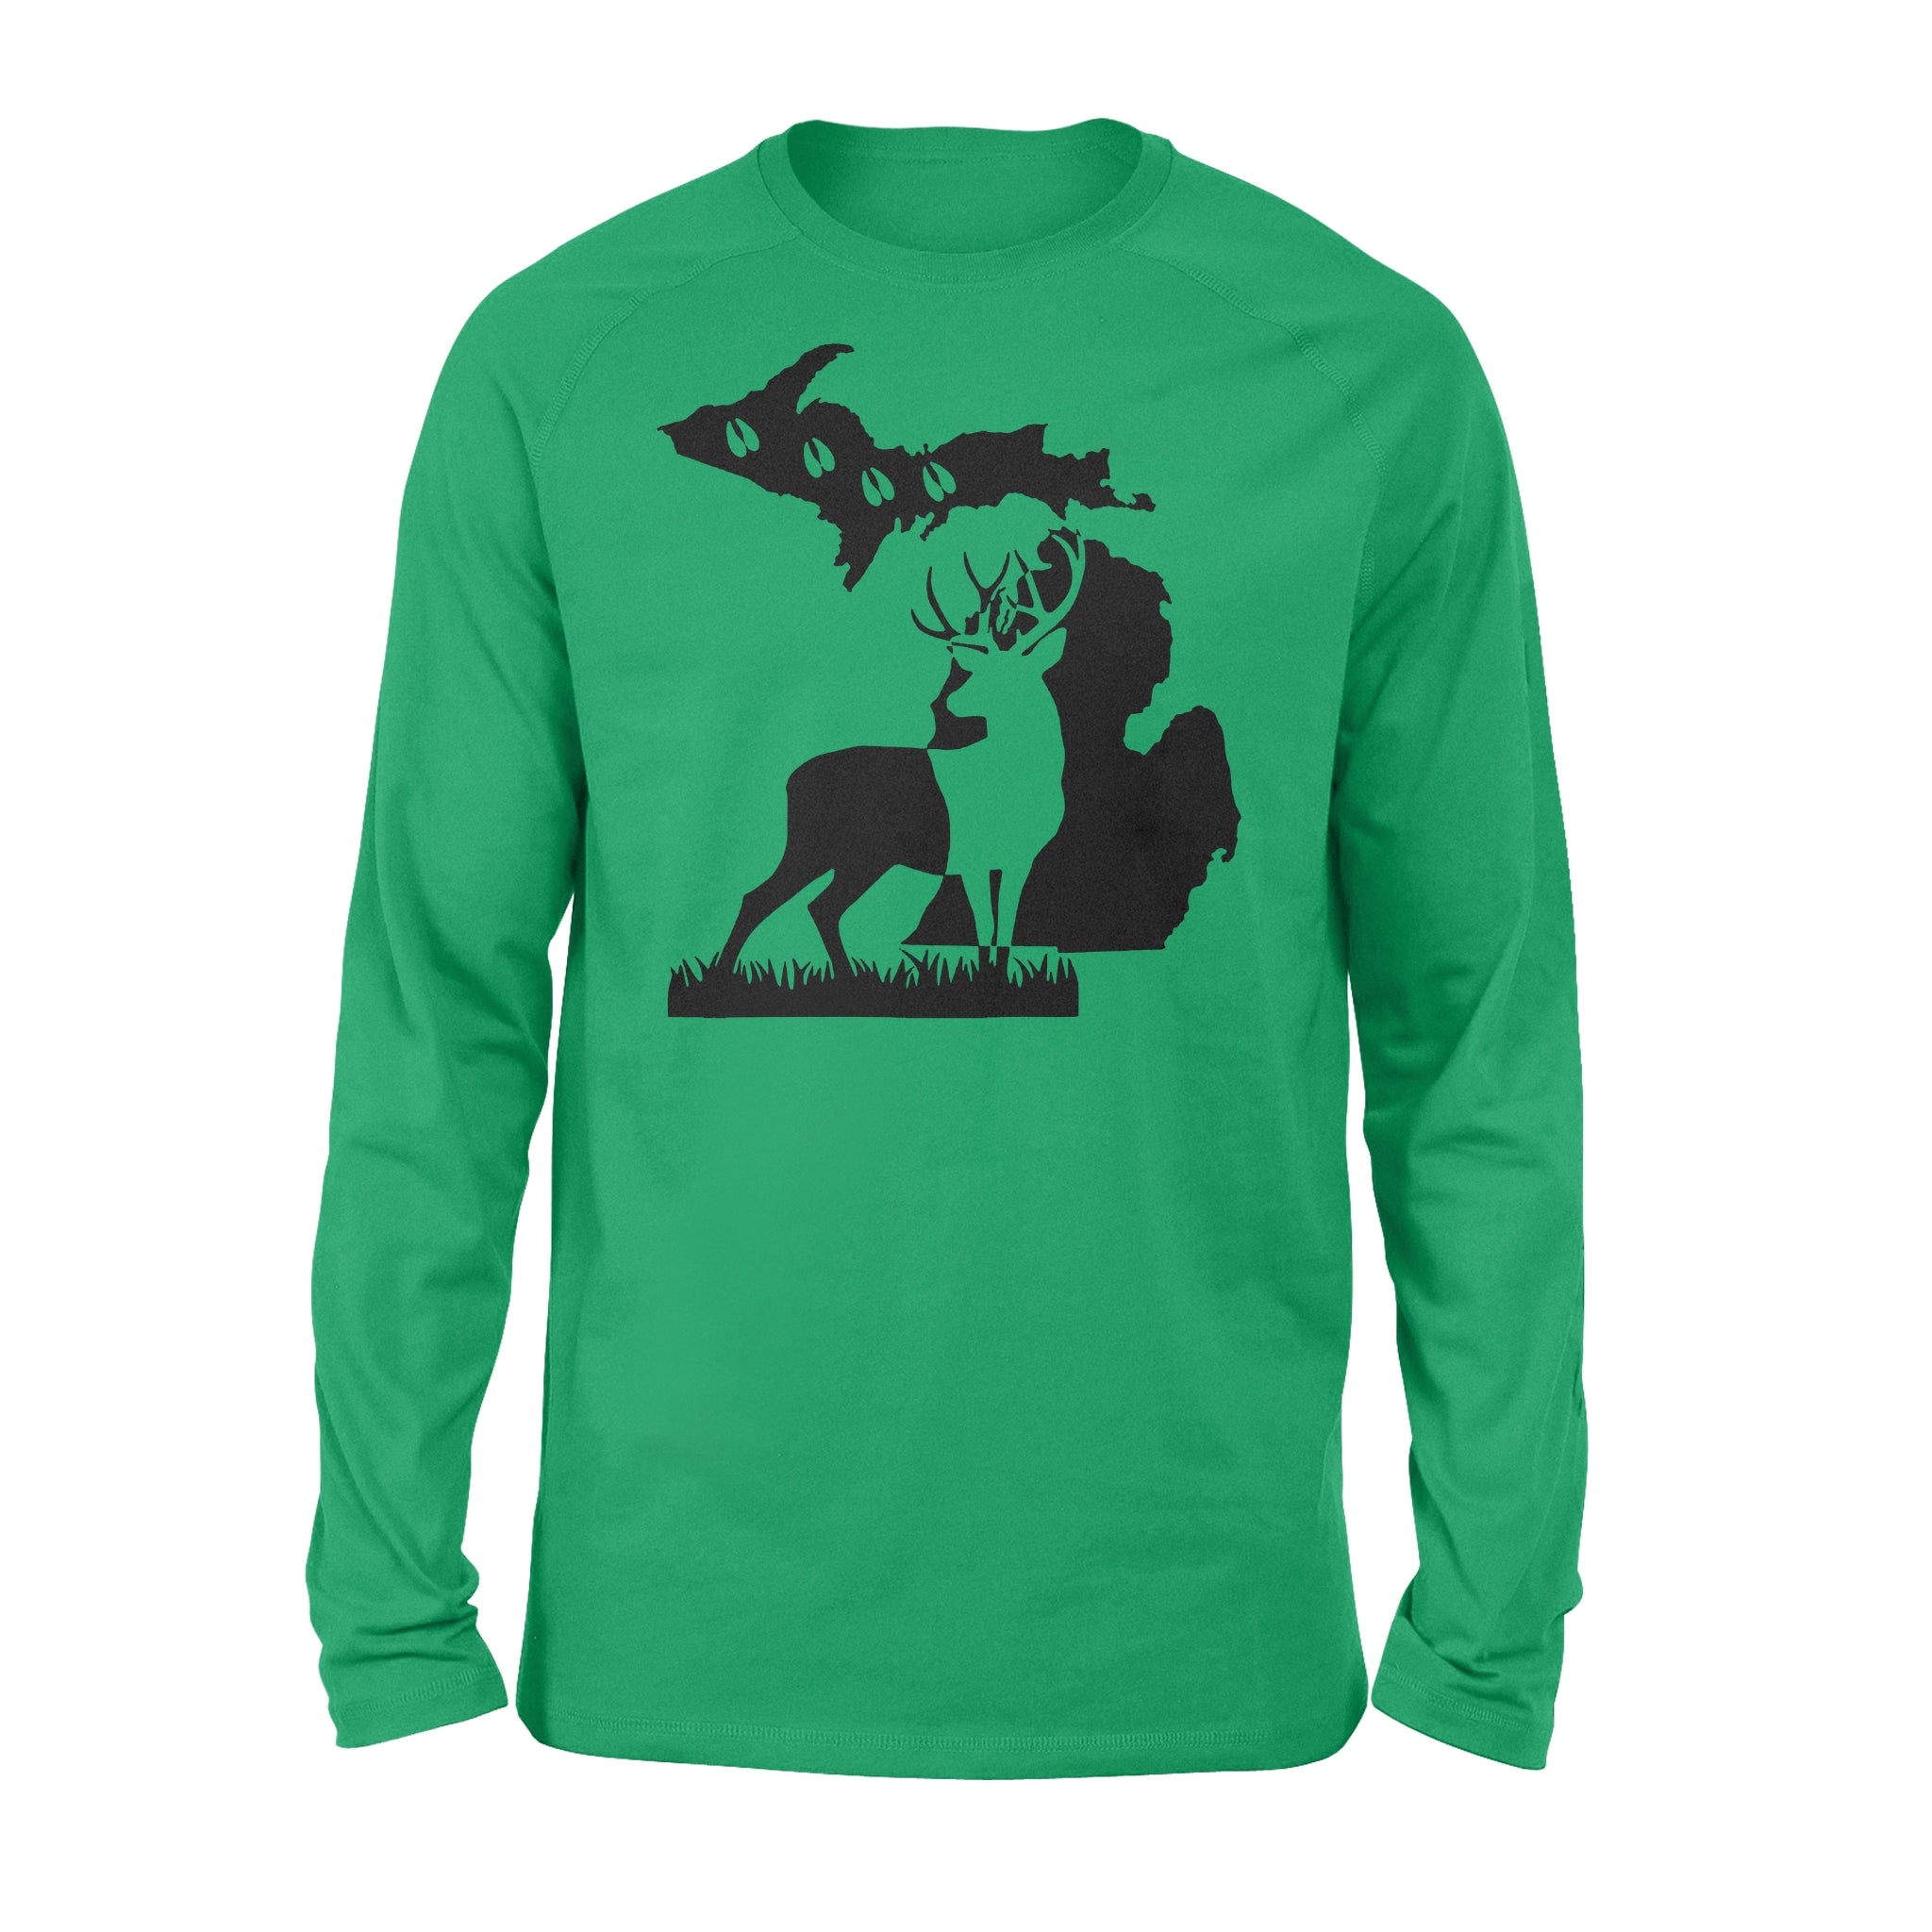 Michigan deer hunting shirt Long sleeve - FSD1187